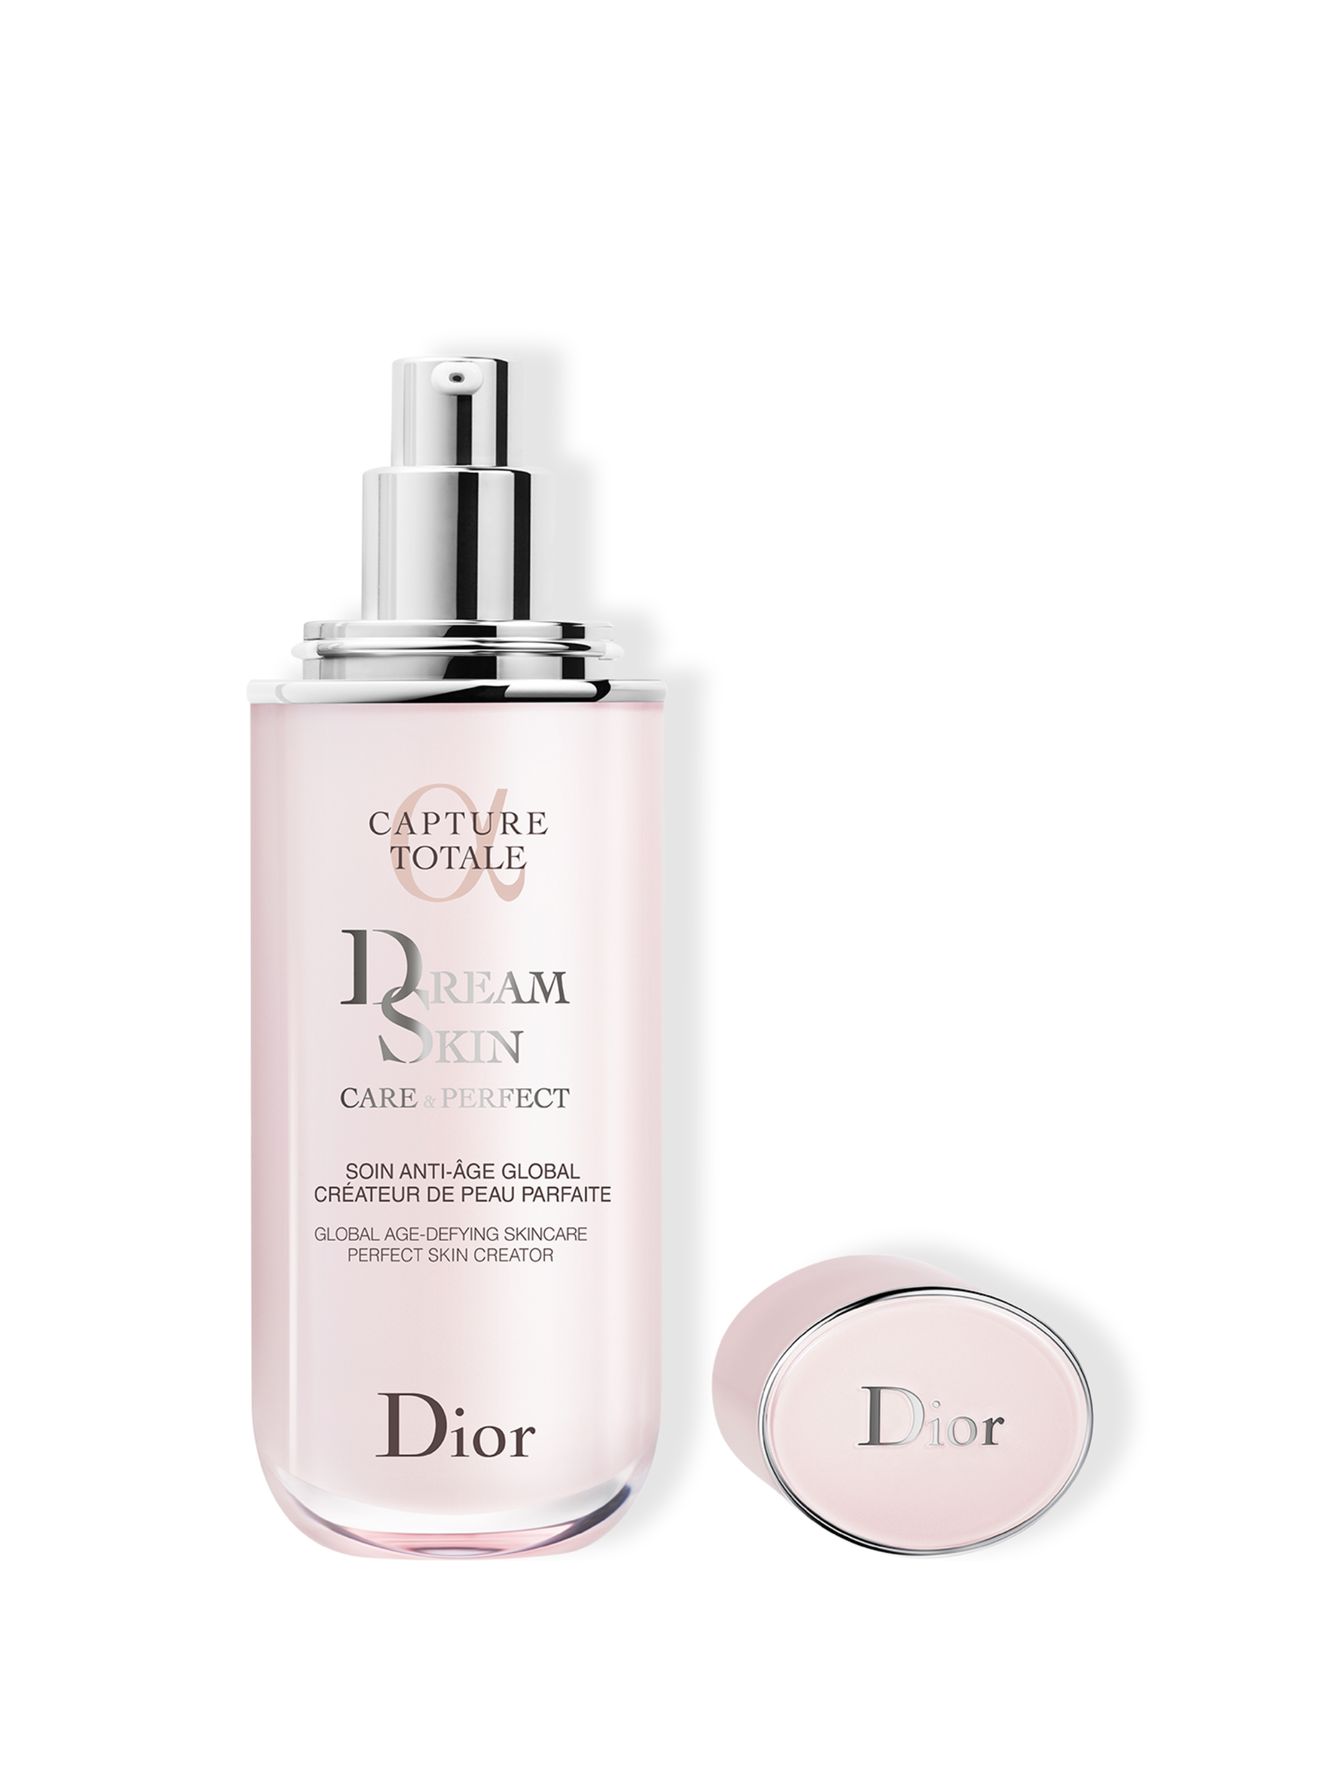 Christian Dior Средство для лица омолаживающее DREAM SKIN CARE&PERFECT 50 мл - Общий вид